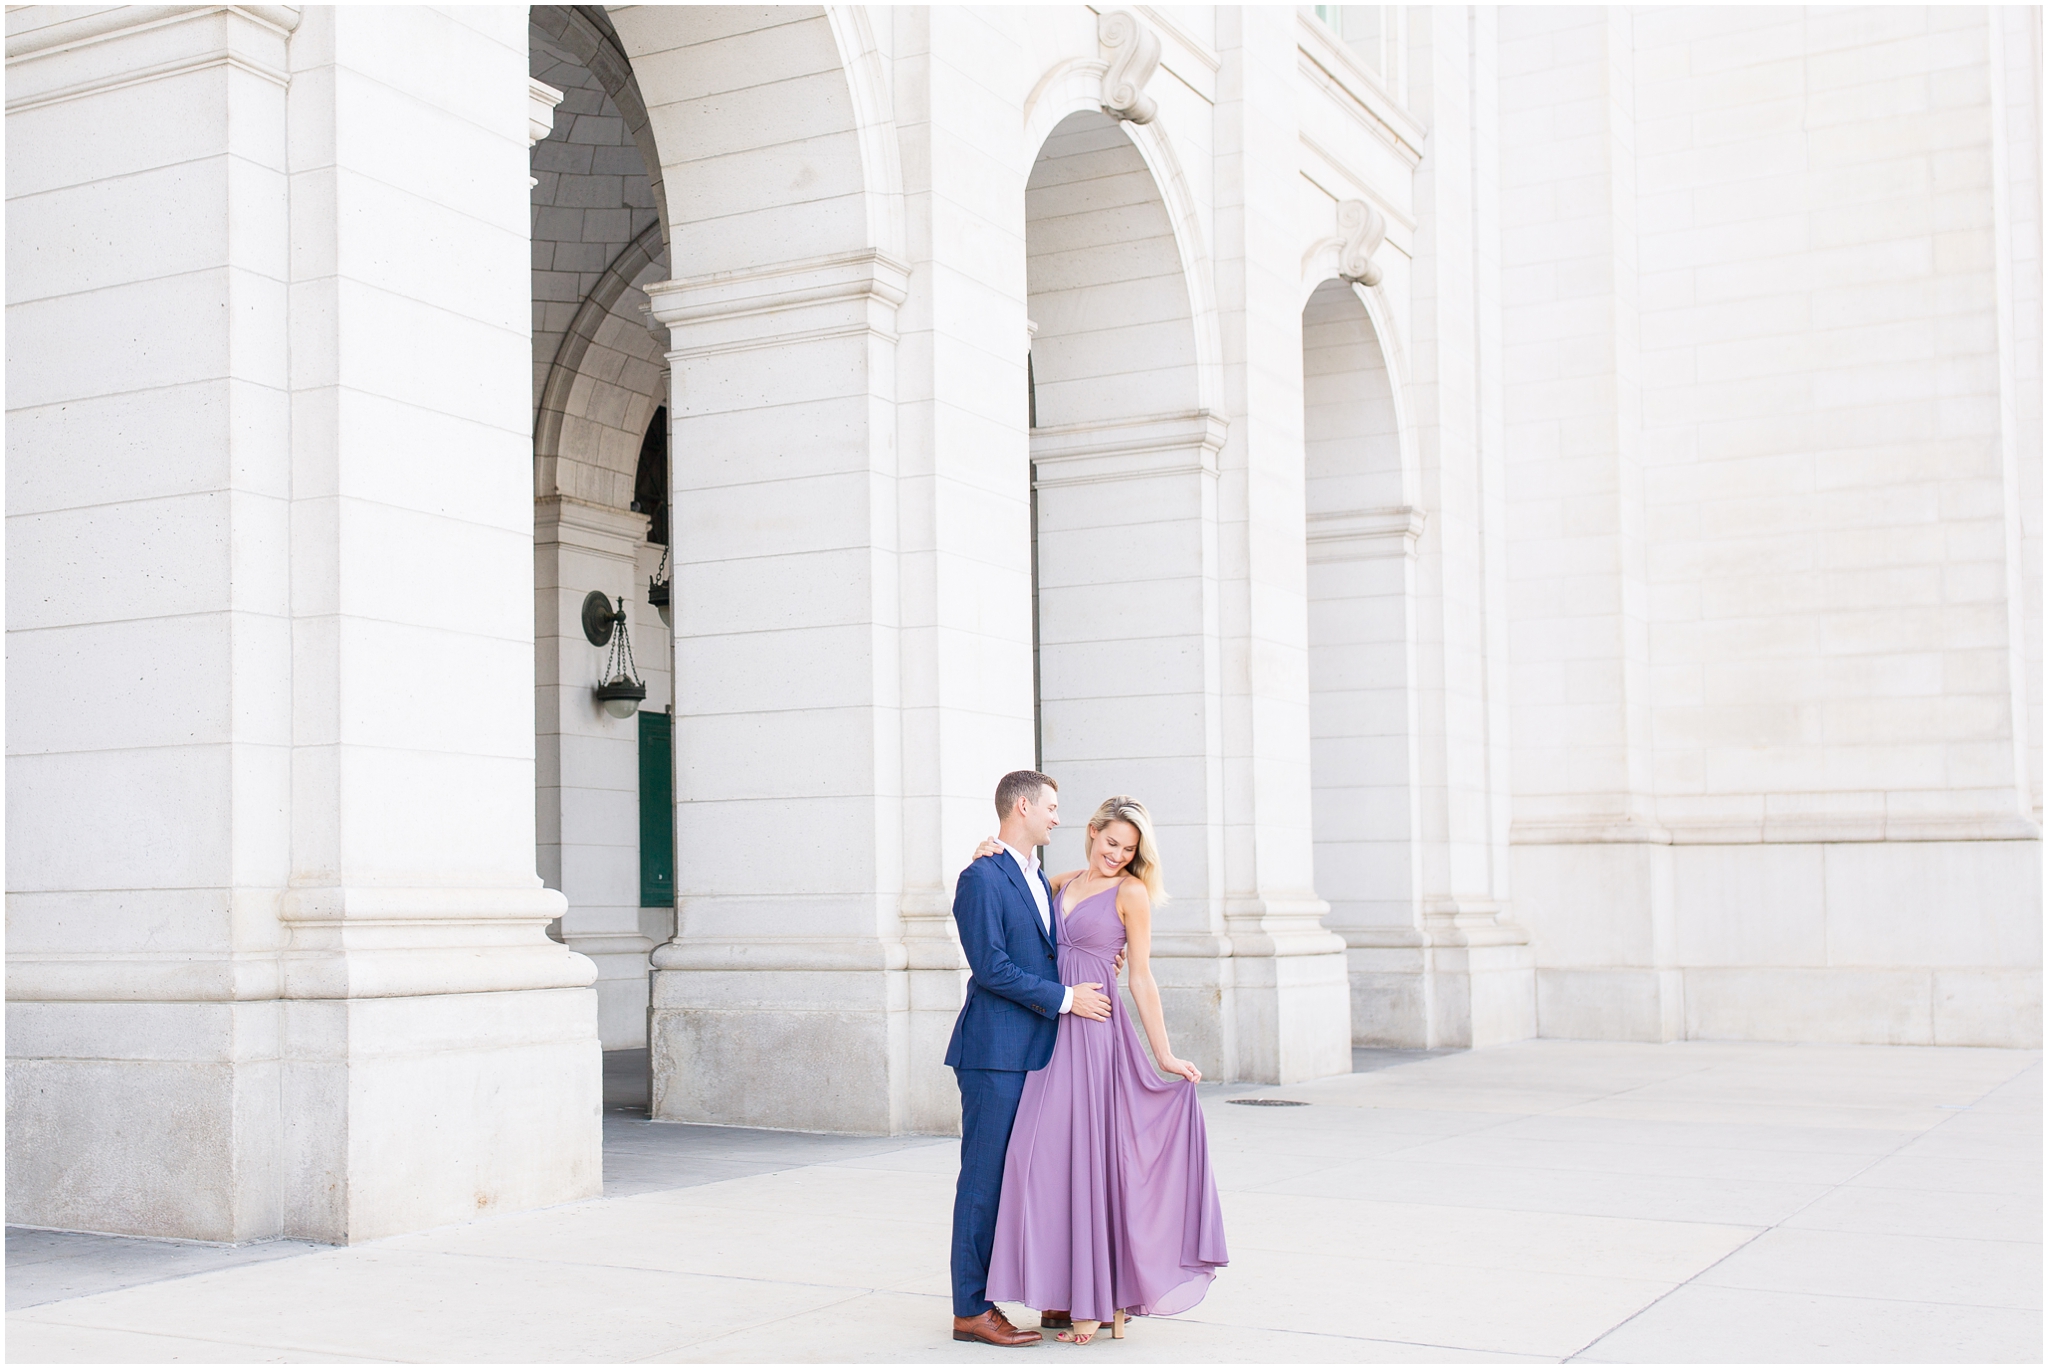 DC wedding photographer captured Union Station engagement session